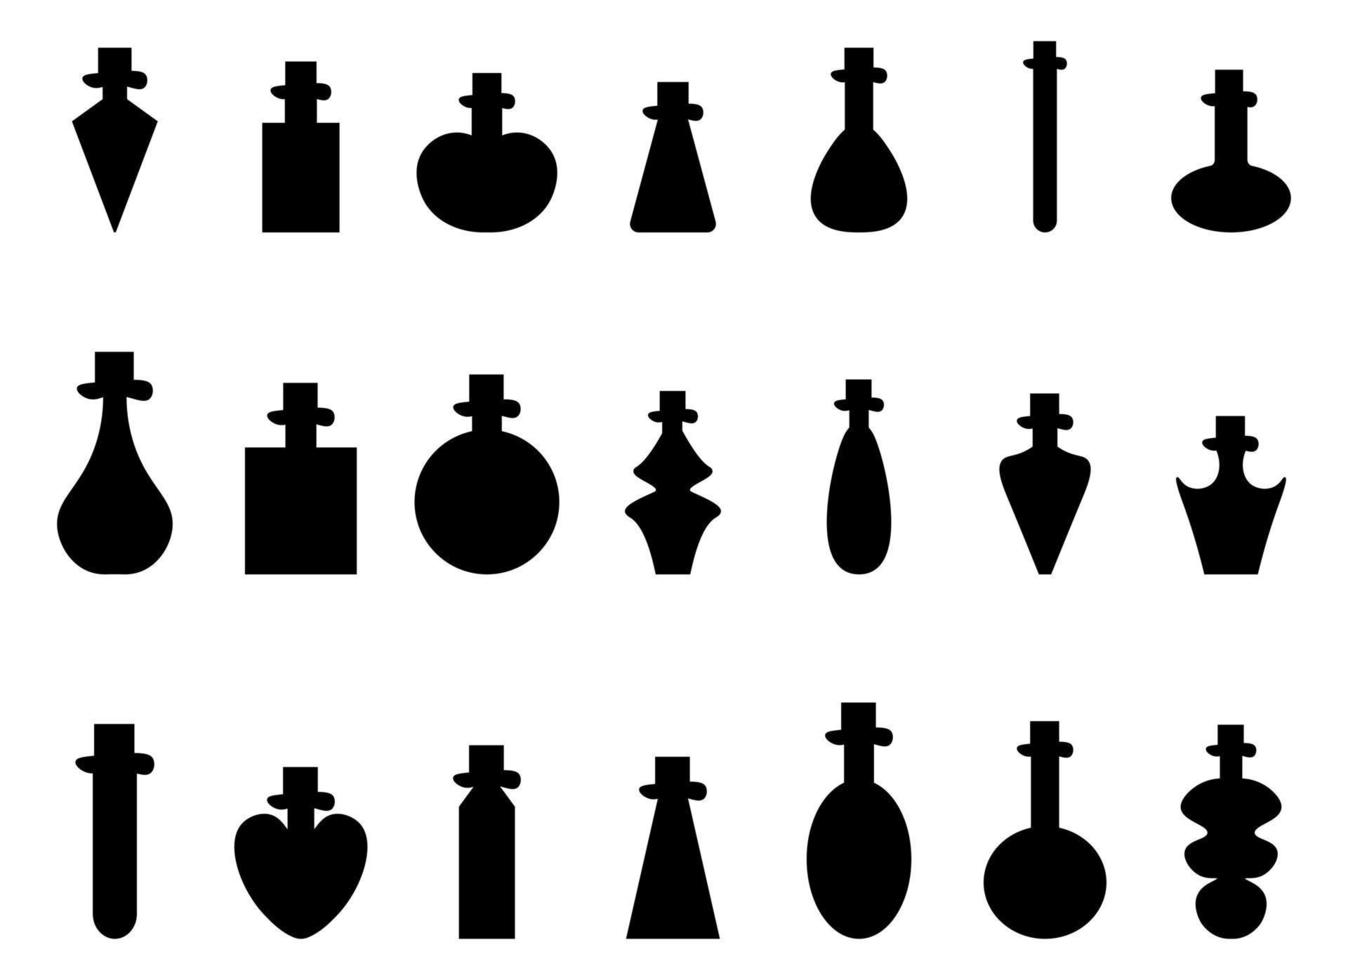 potion bottle vector design illustration isolated on white background